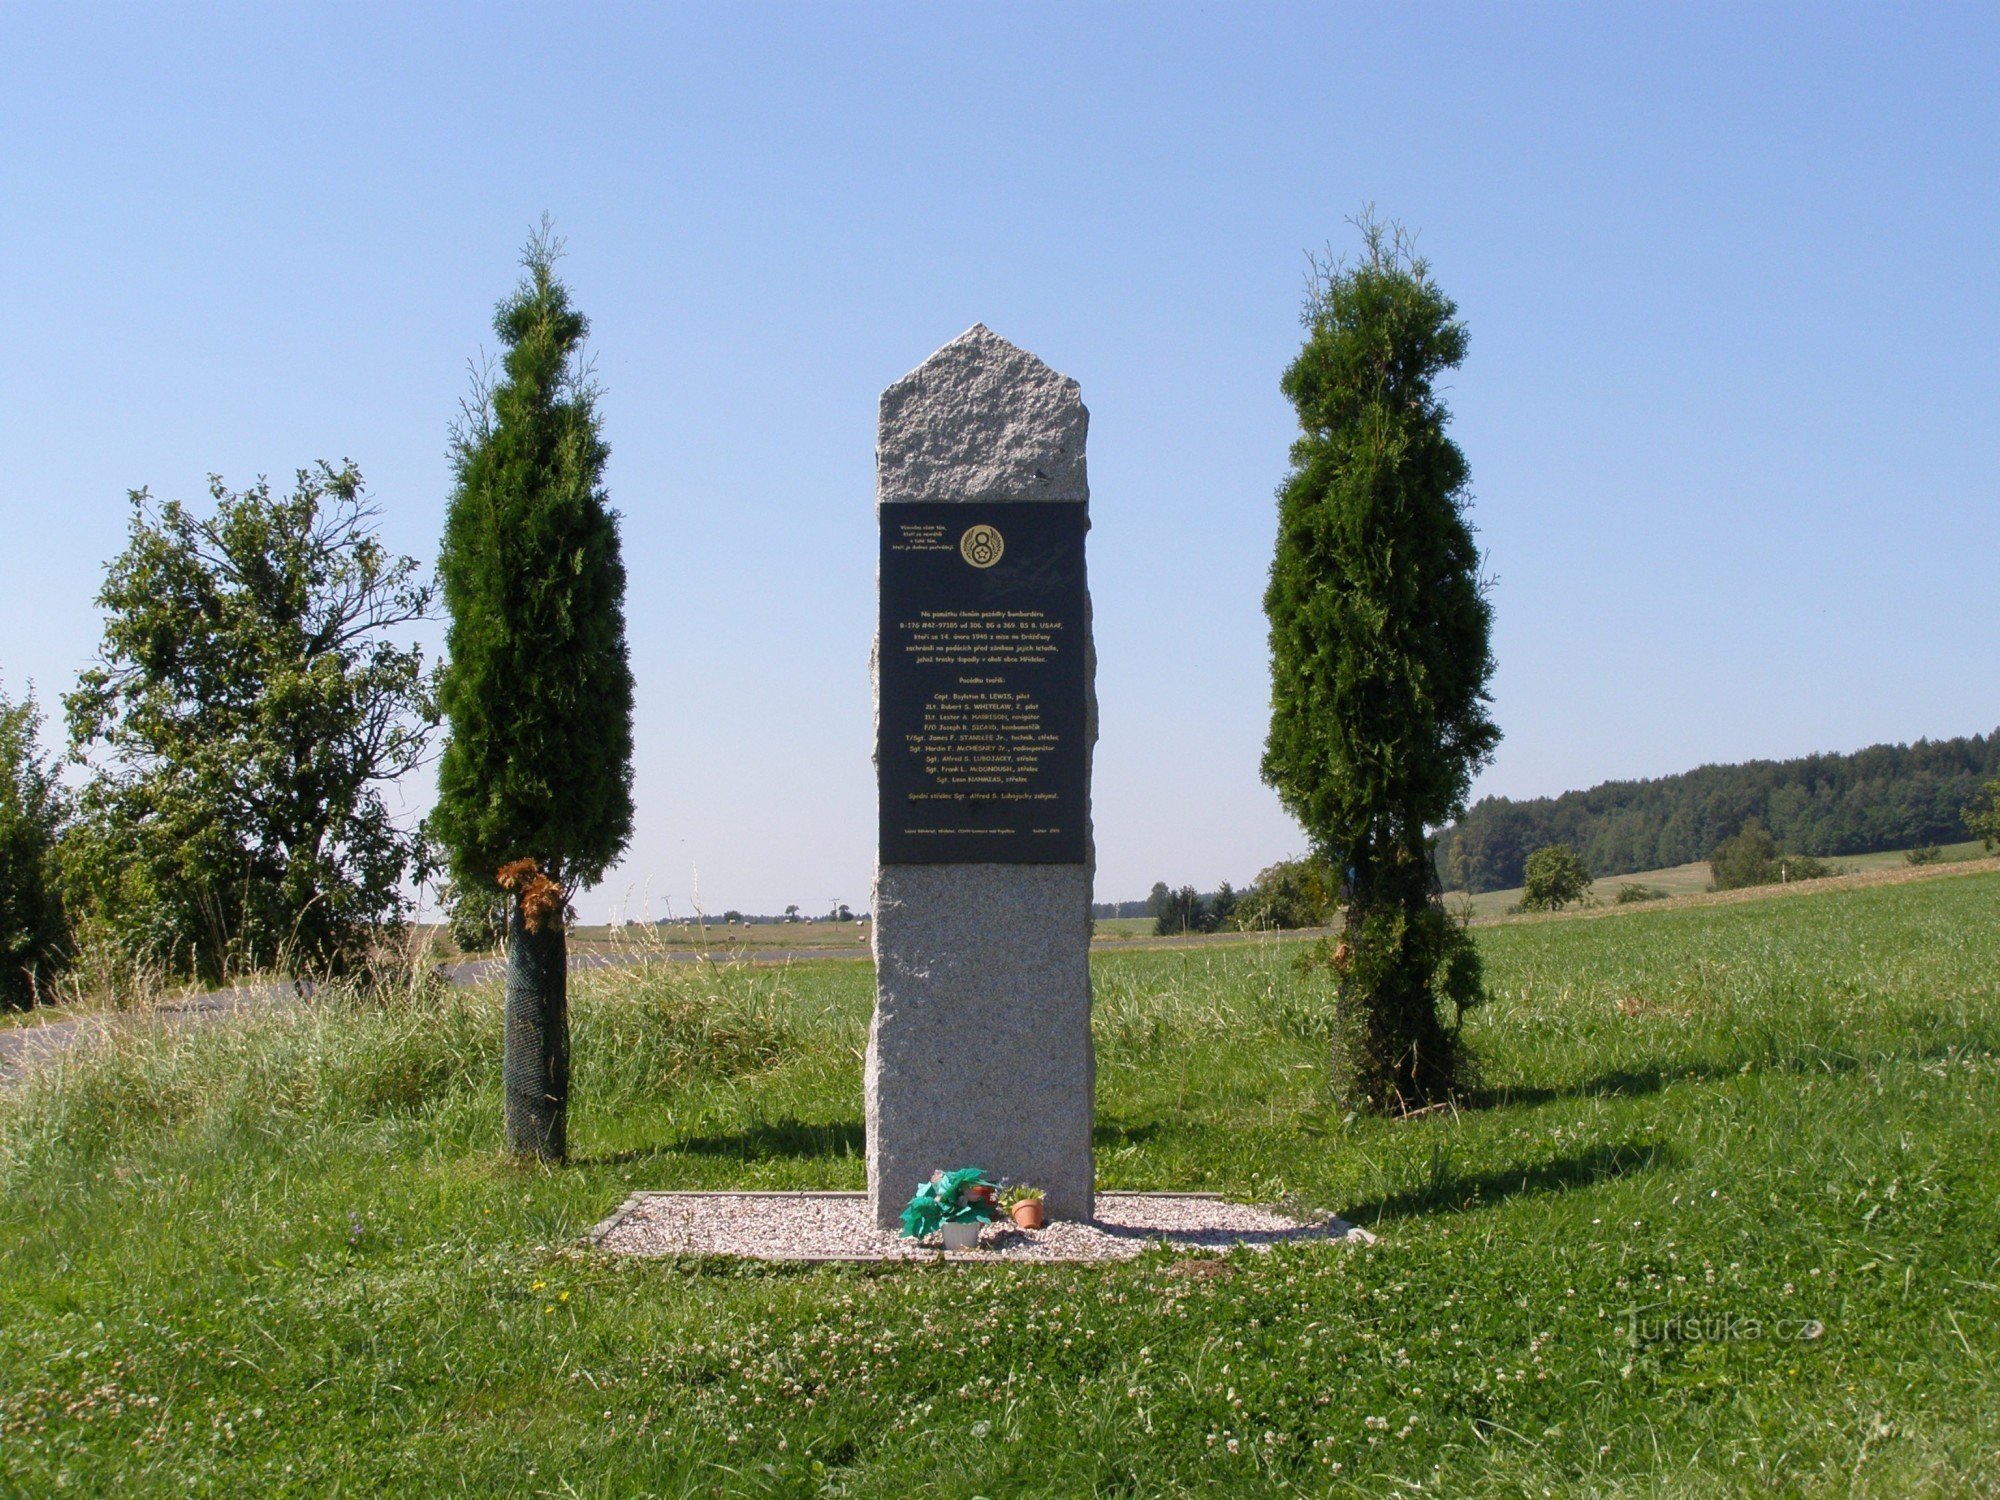 Hřídelec - アメリカの飛行士の記念碑